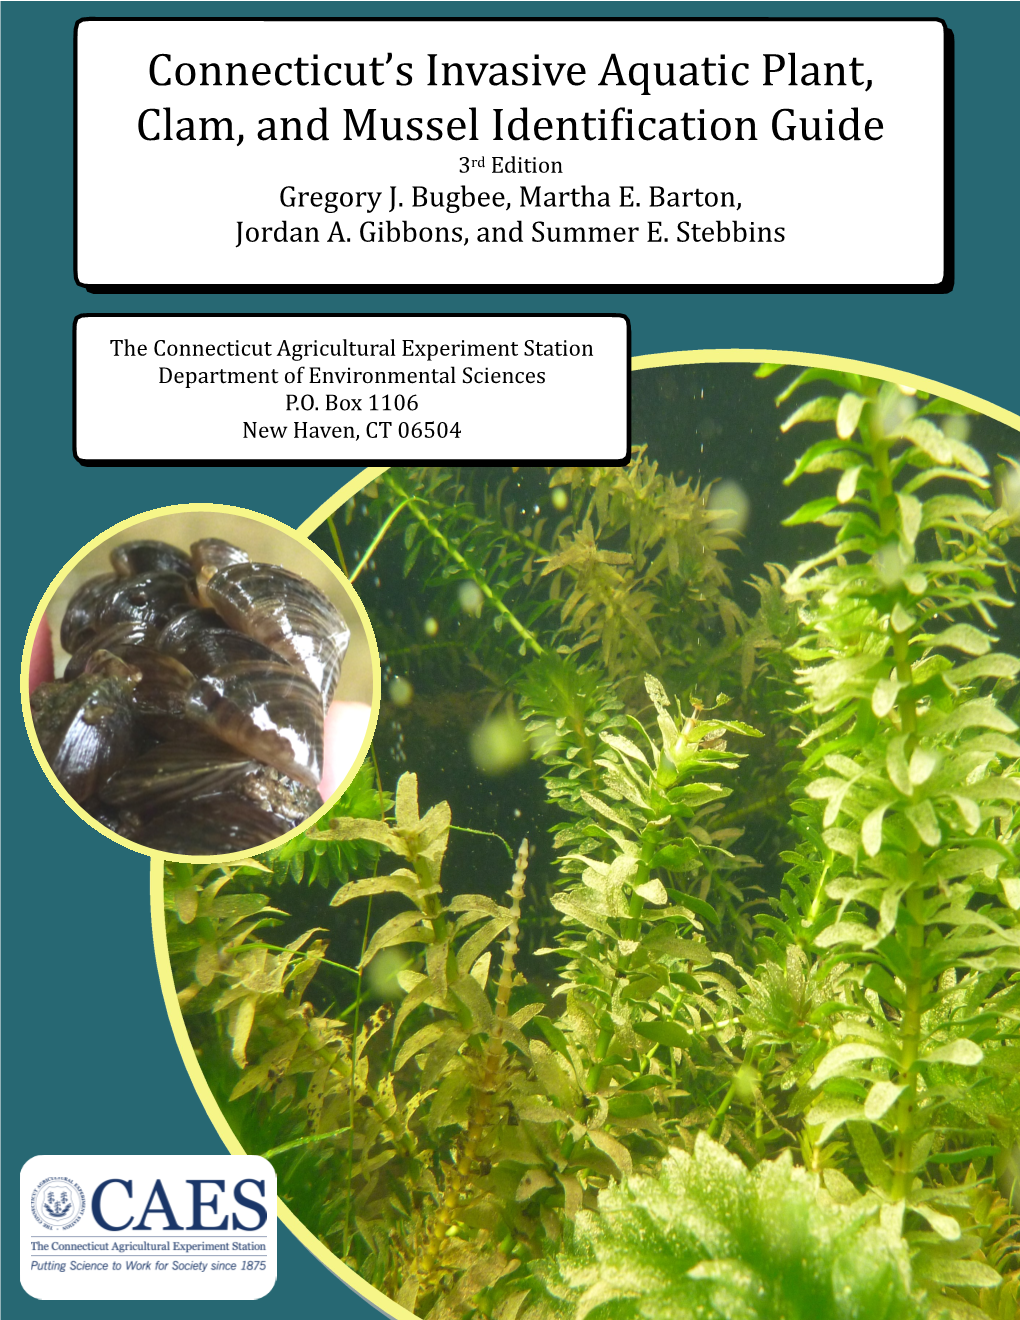 Connecticut's Invasive Aquatic Plant, Clam, and Mussel Identification Guide